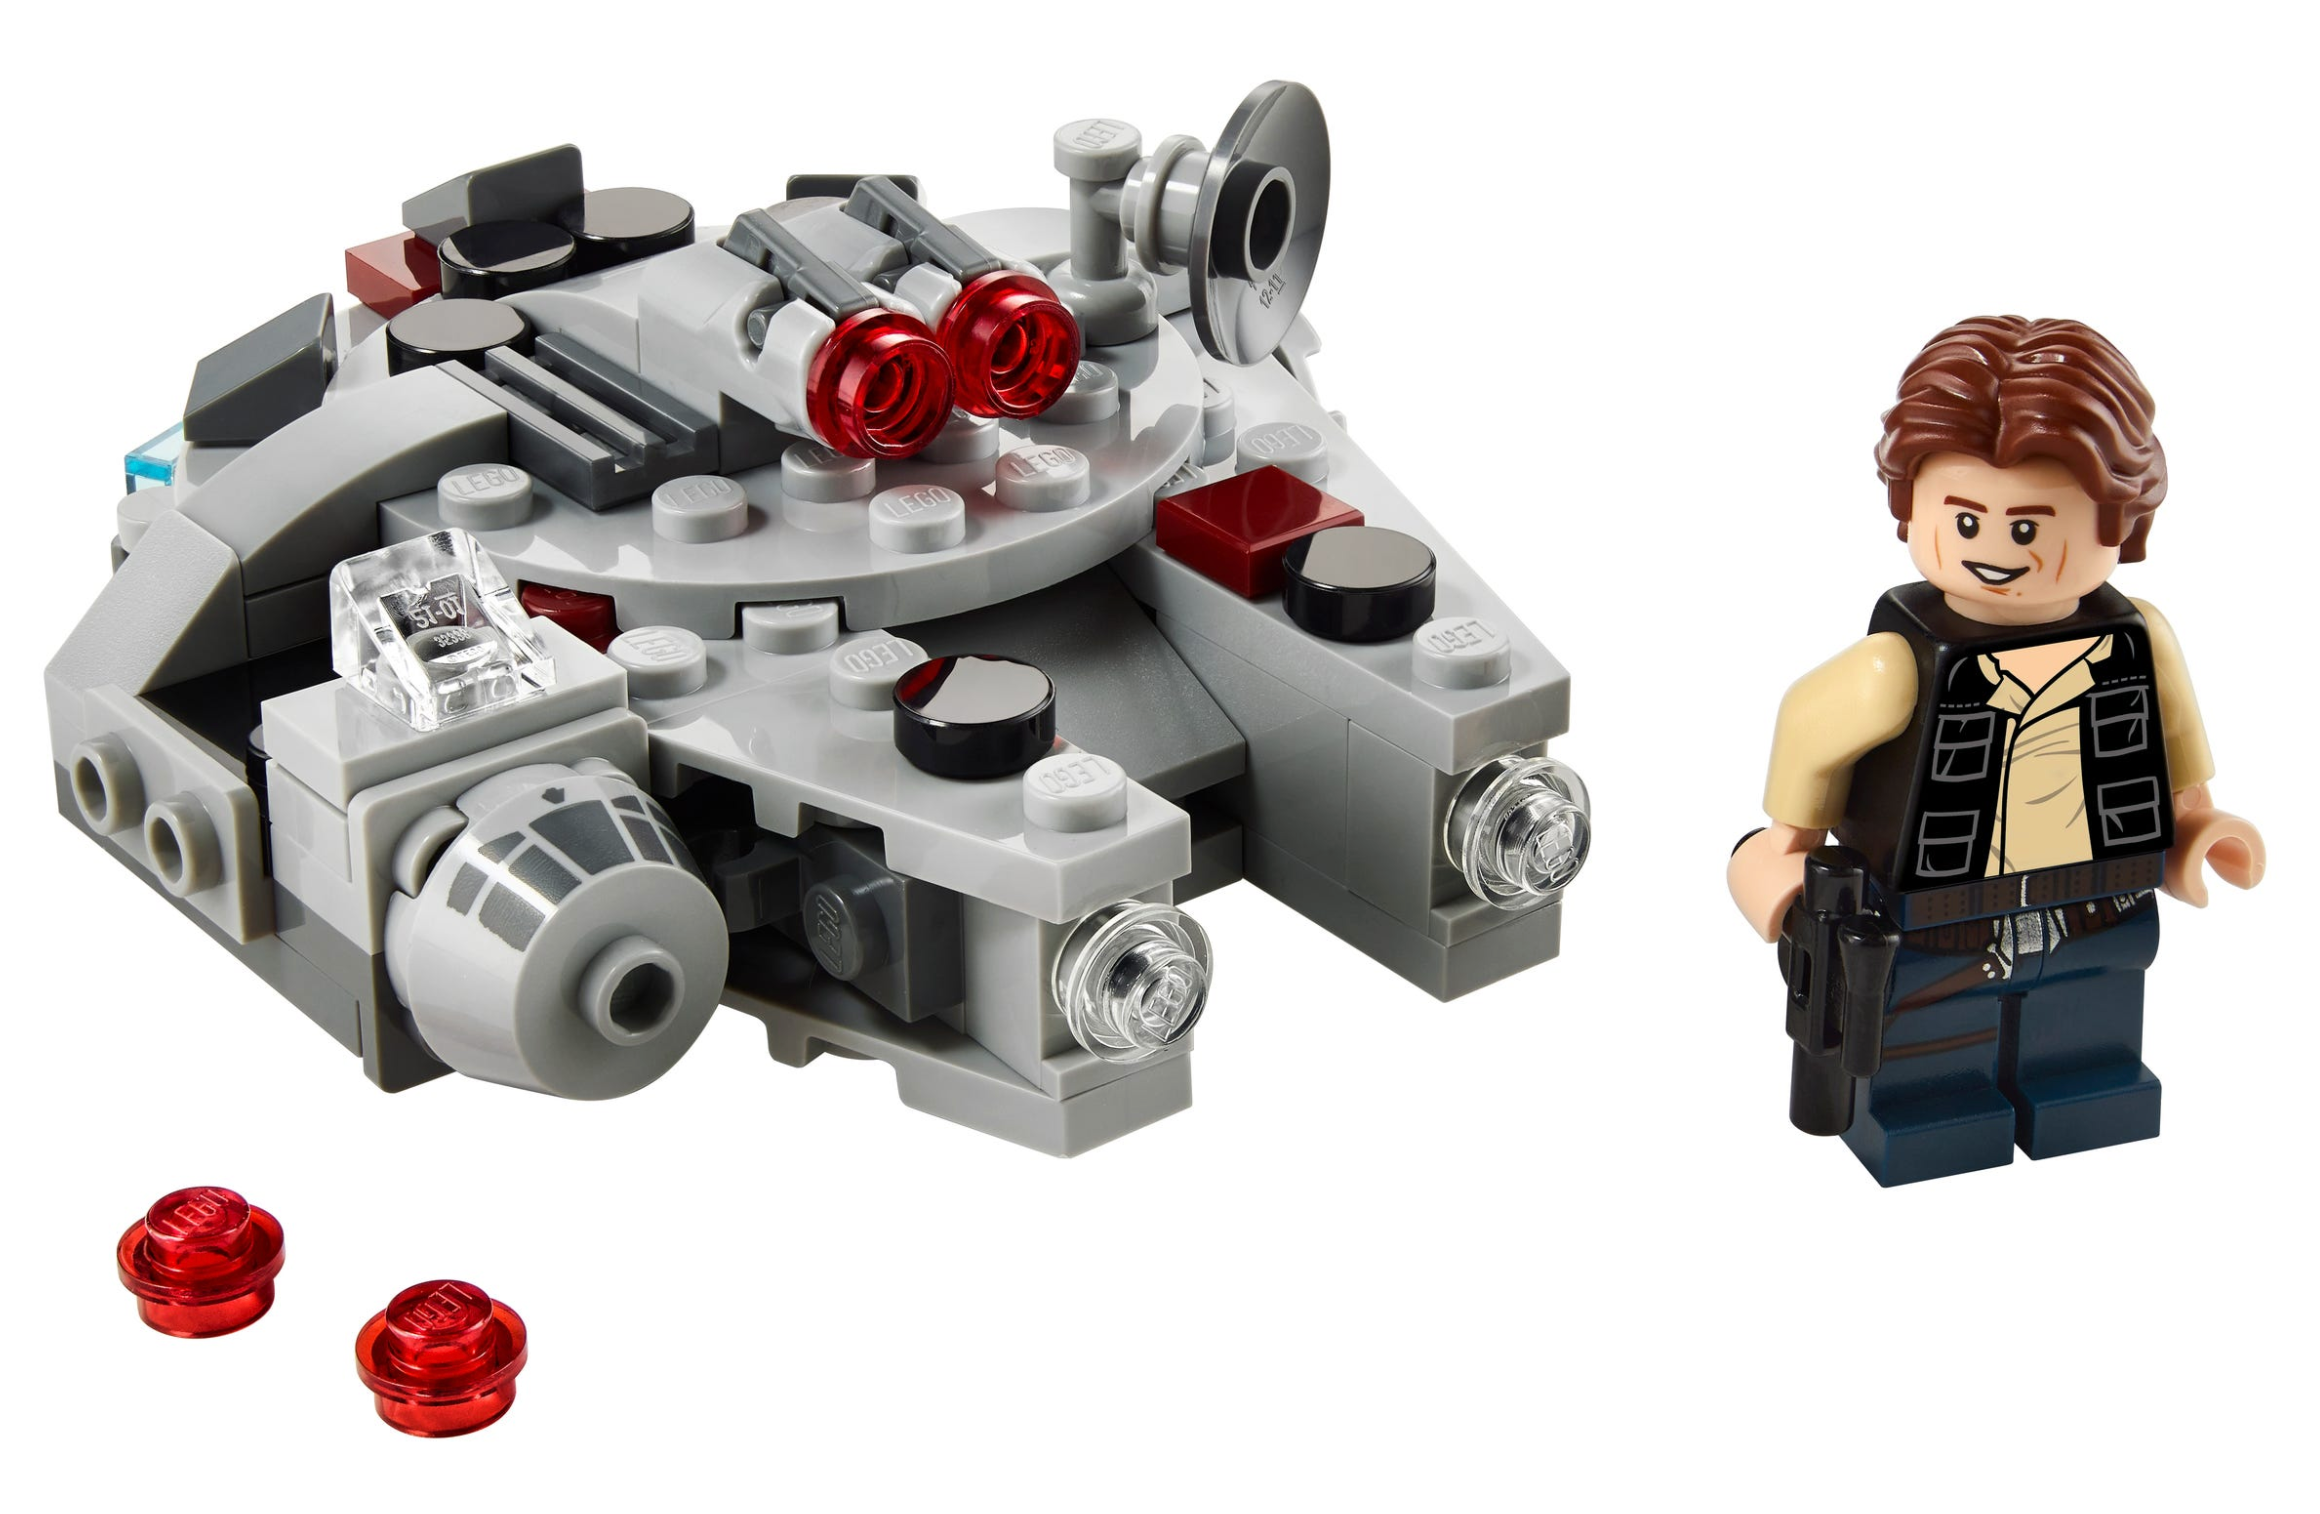 LEGO: Star Wars - Millennium Falcon™ Microfighter